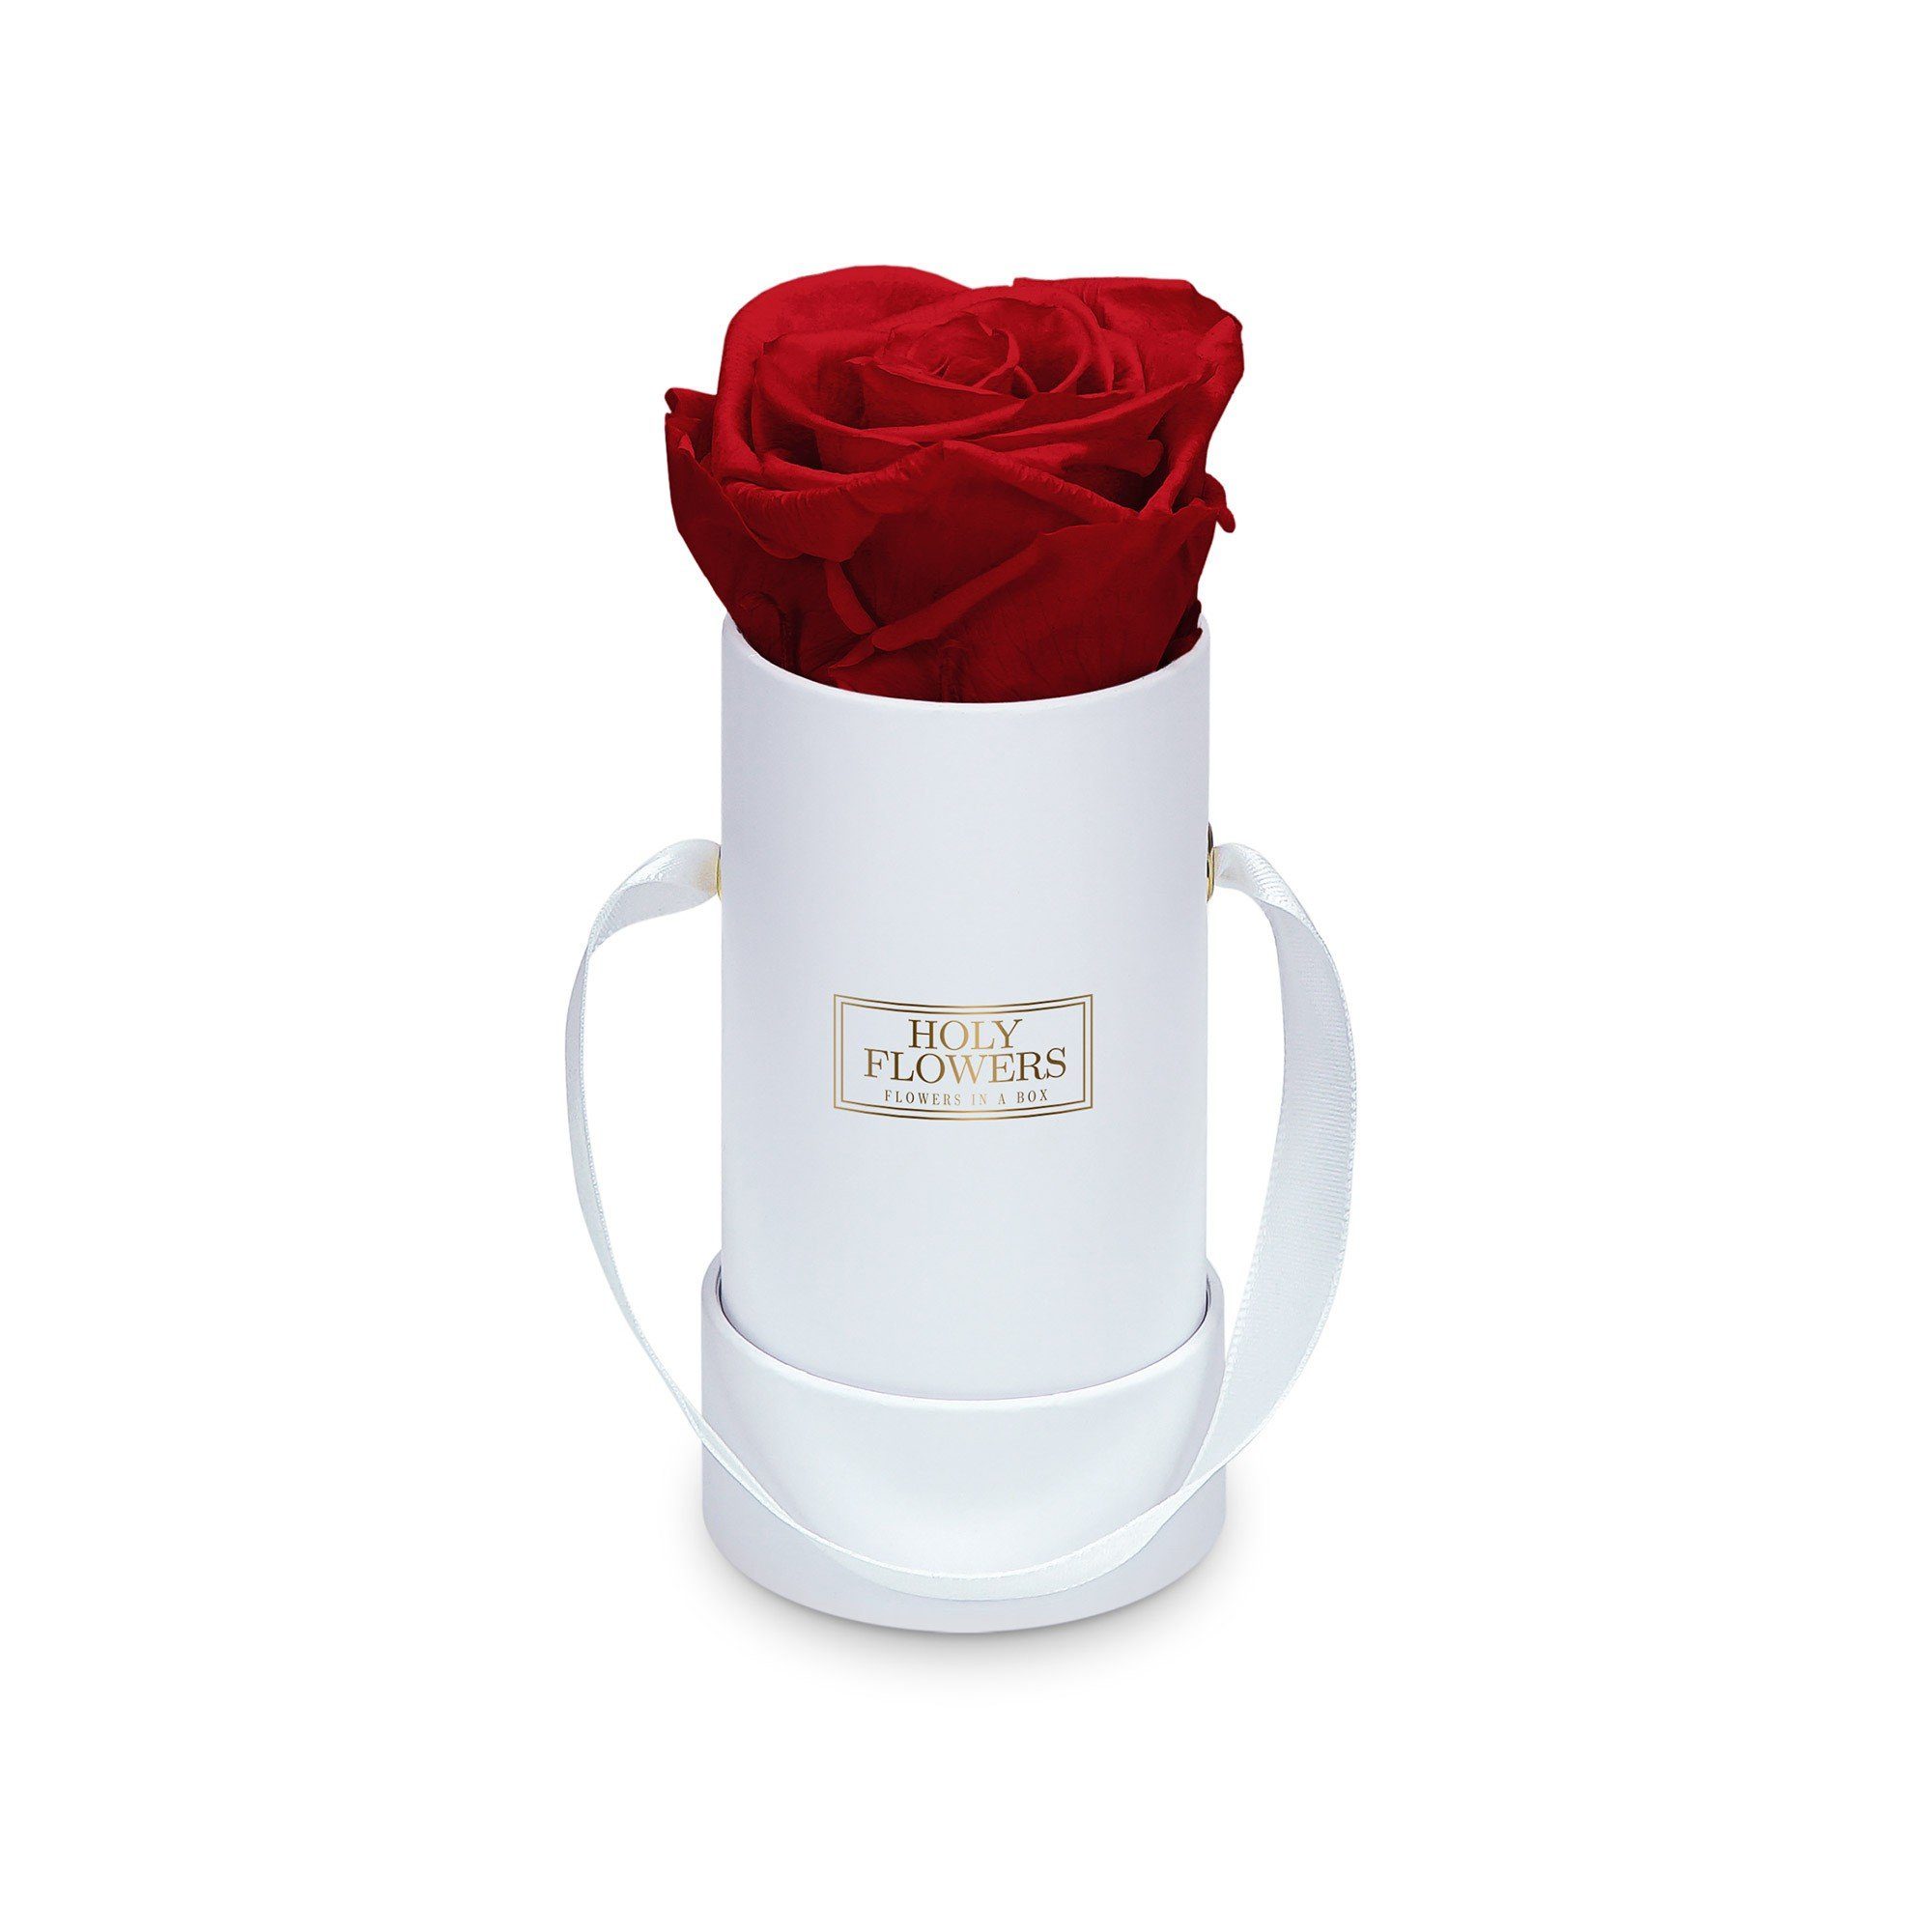 Kunstblume Runde Rosenbox in weiß mit 1er Infinity Rose I 3 Jahre haltbar I Echte, duftende konservierte Blumen I by Raul Richter Infinity Rose, Holy Flowers, Höhe 9 cm Heritage Red